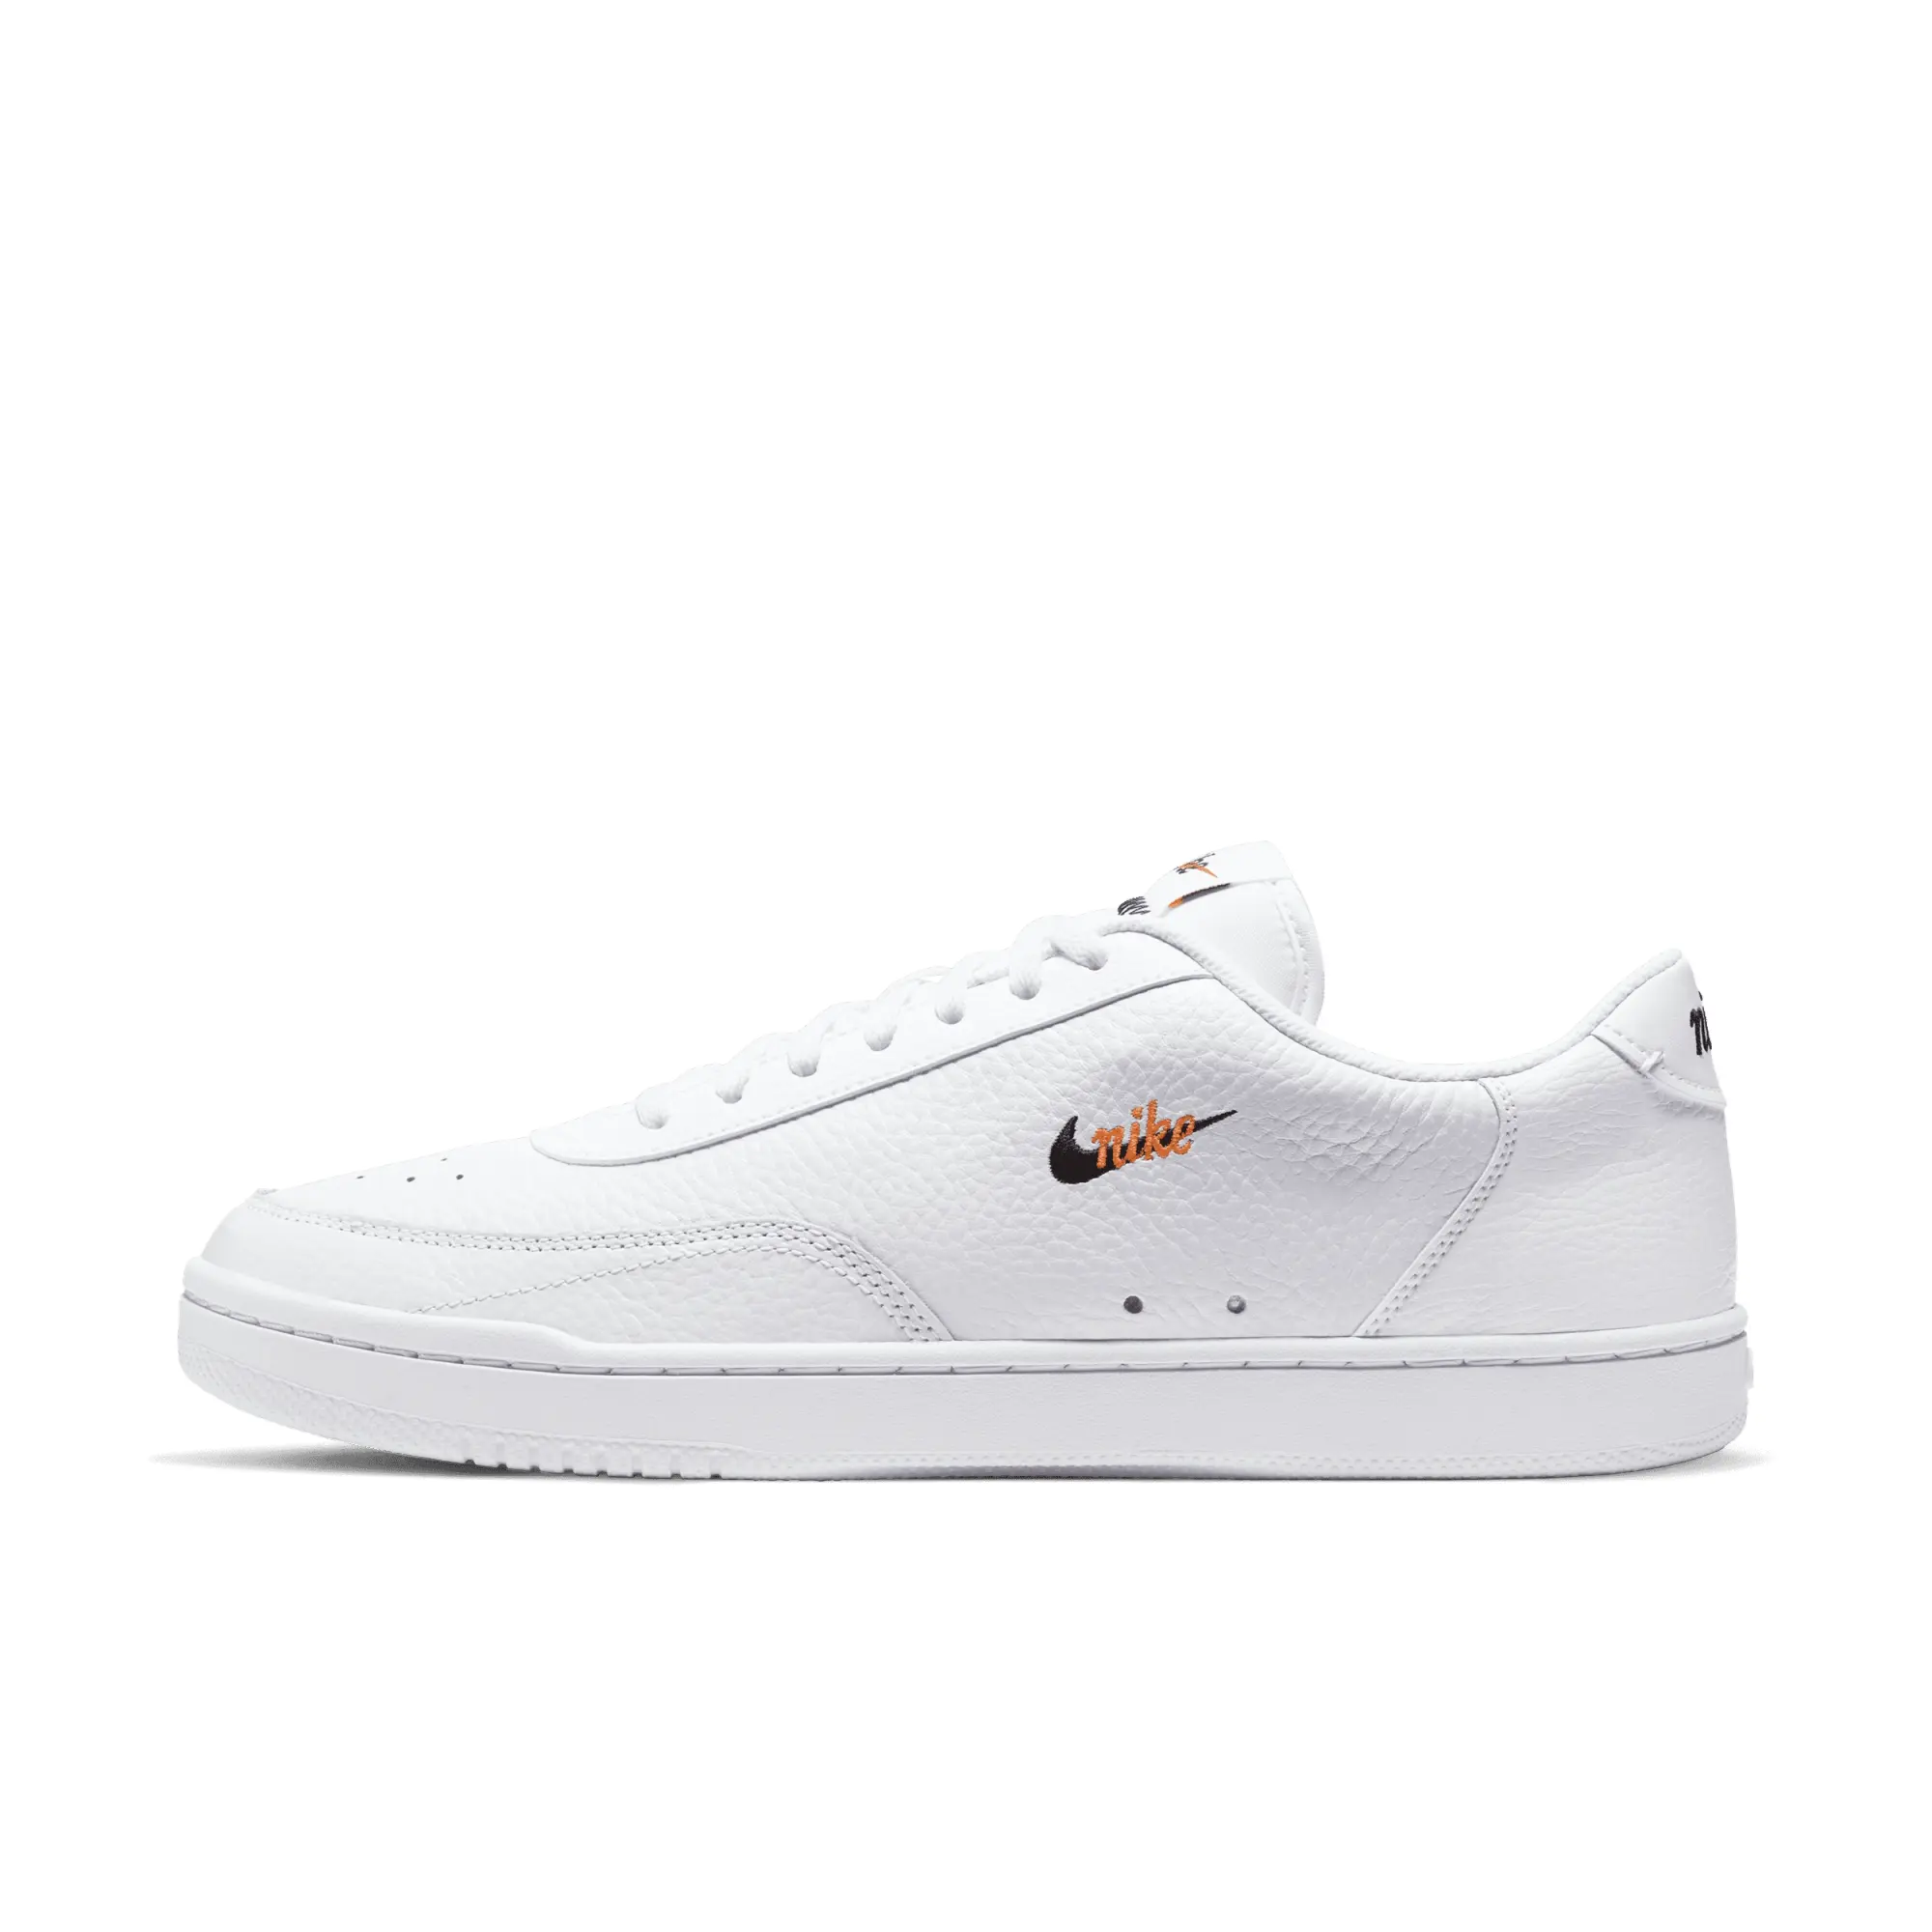 Nike court vintage premium trainers in white & orange